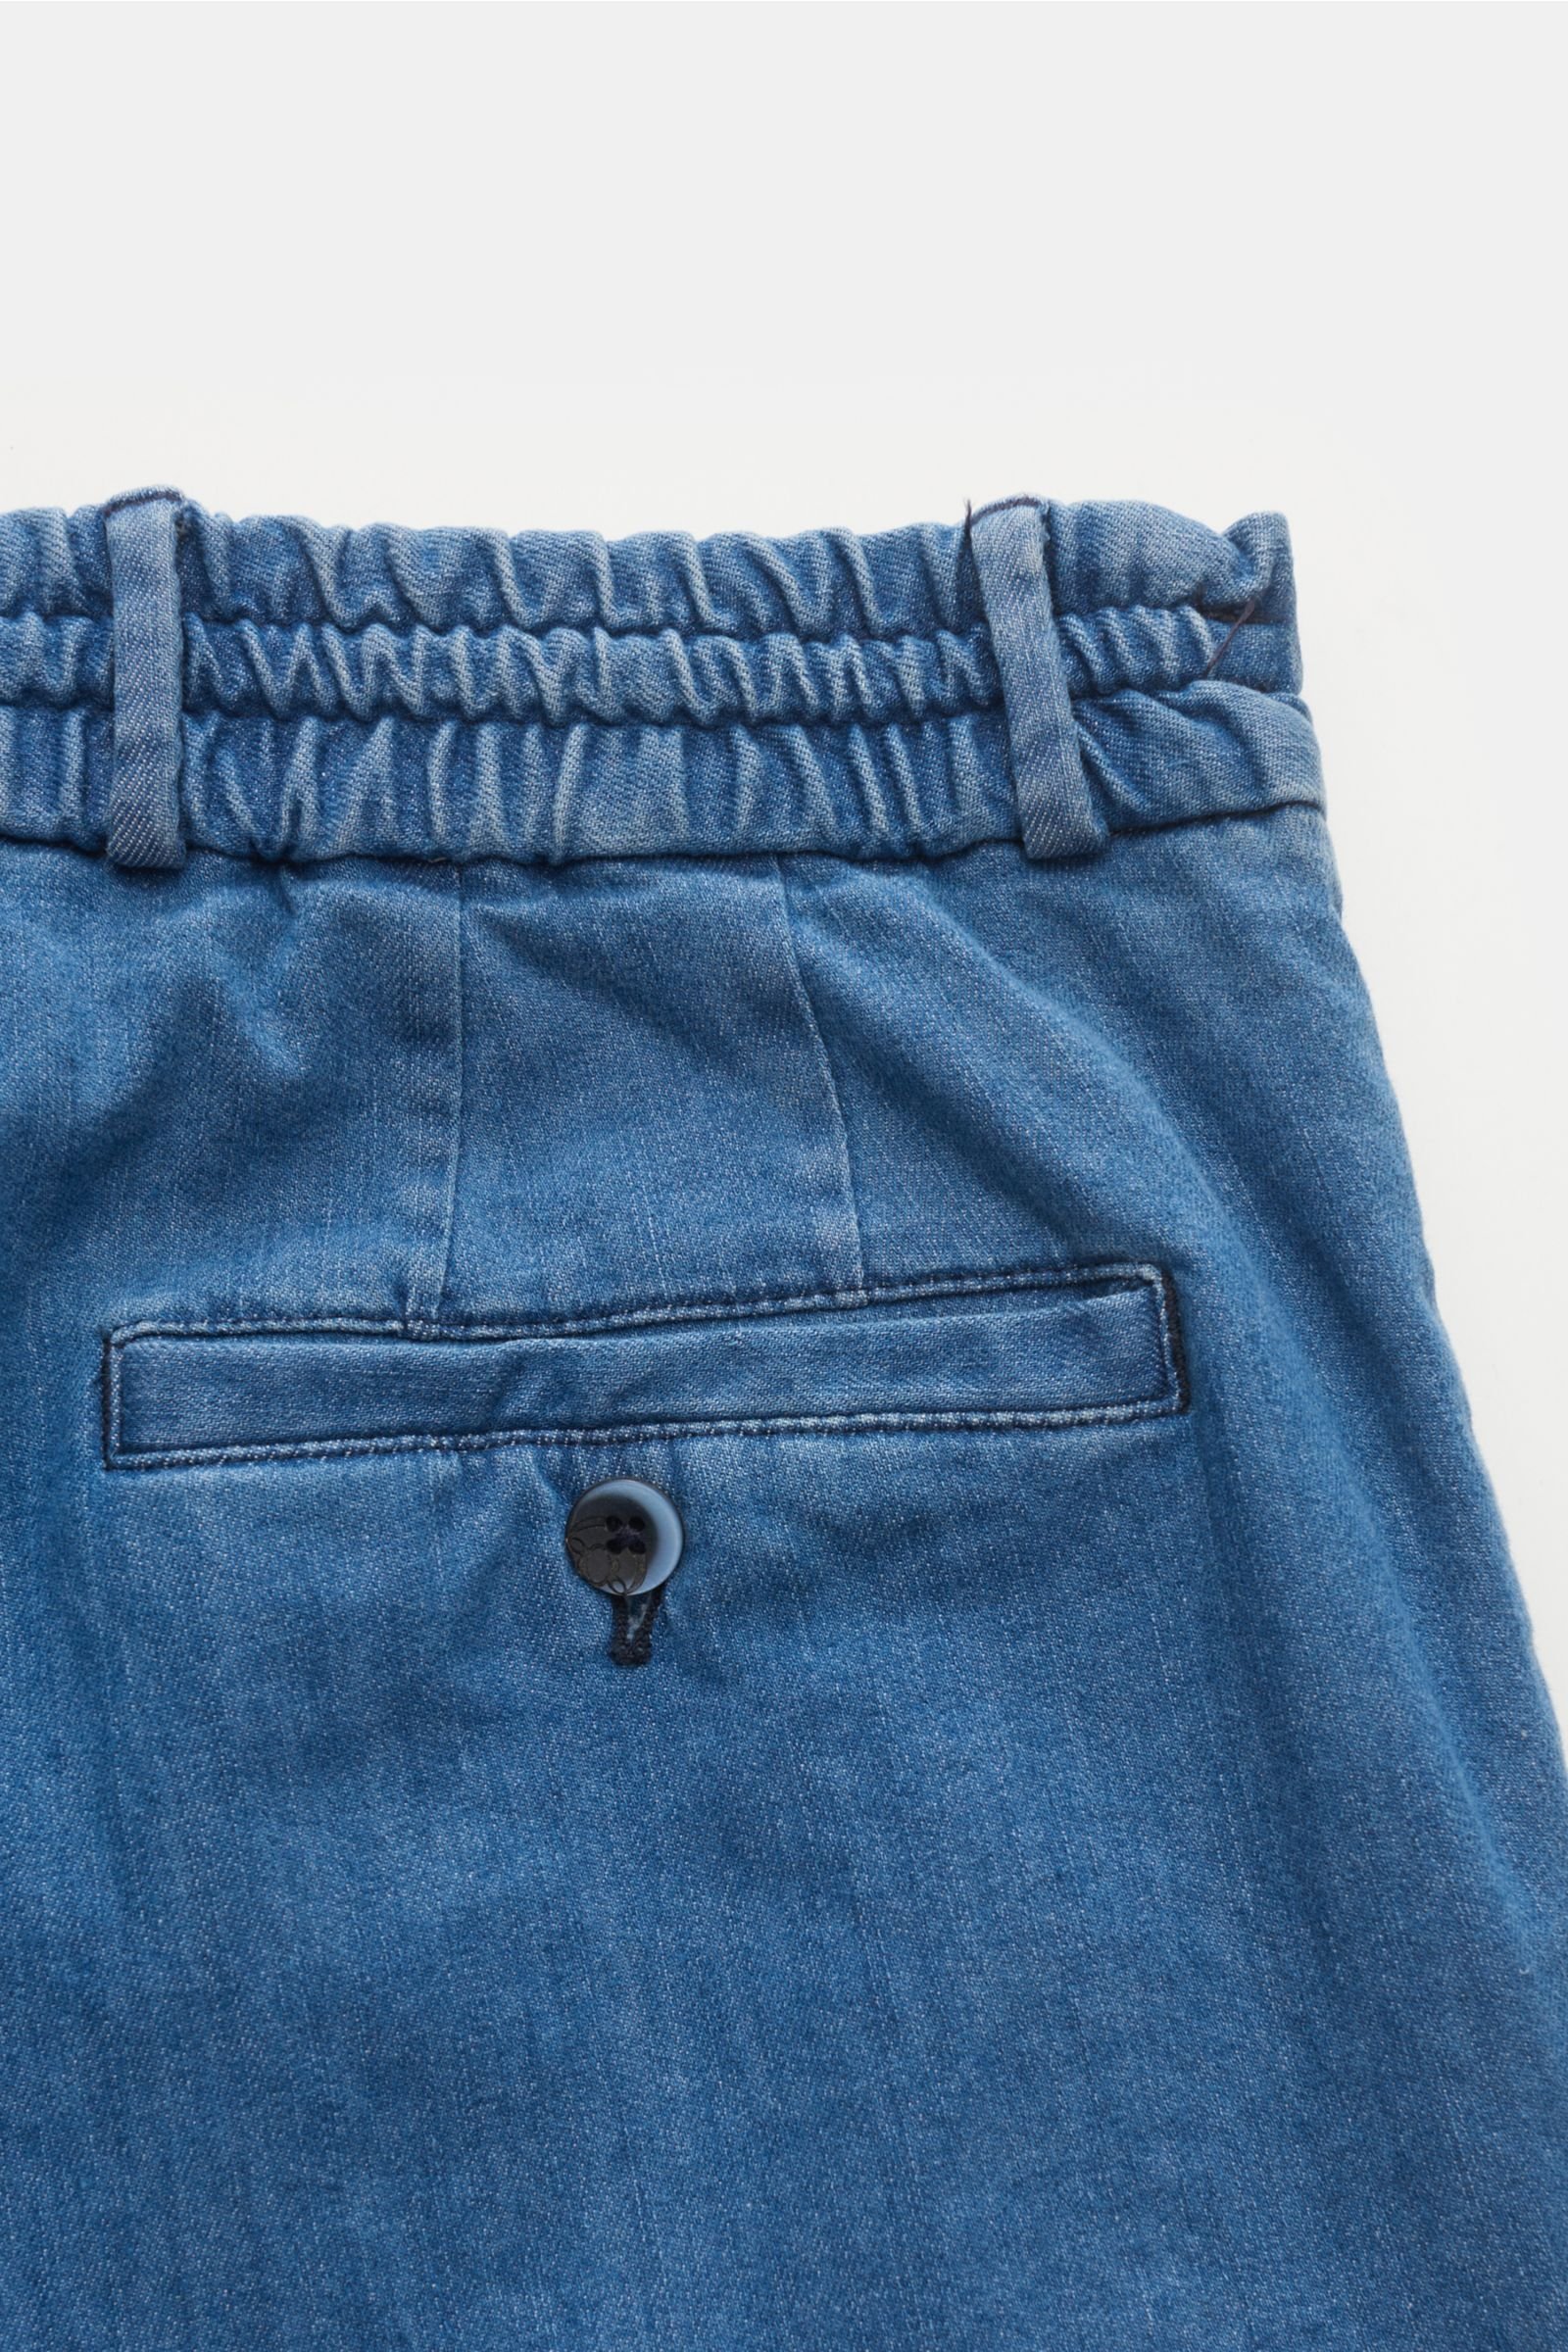 Minkpink Boyfriend-Jeansshorts Gr Fashion Denim Shorts Short Trousers 38 II 